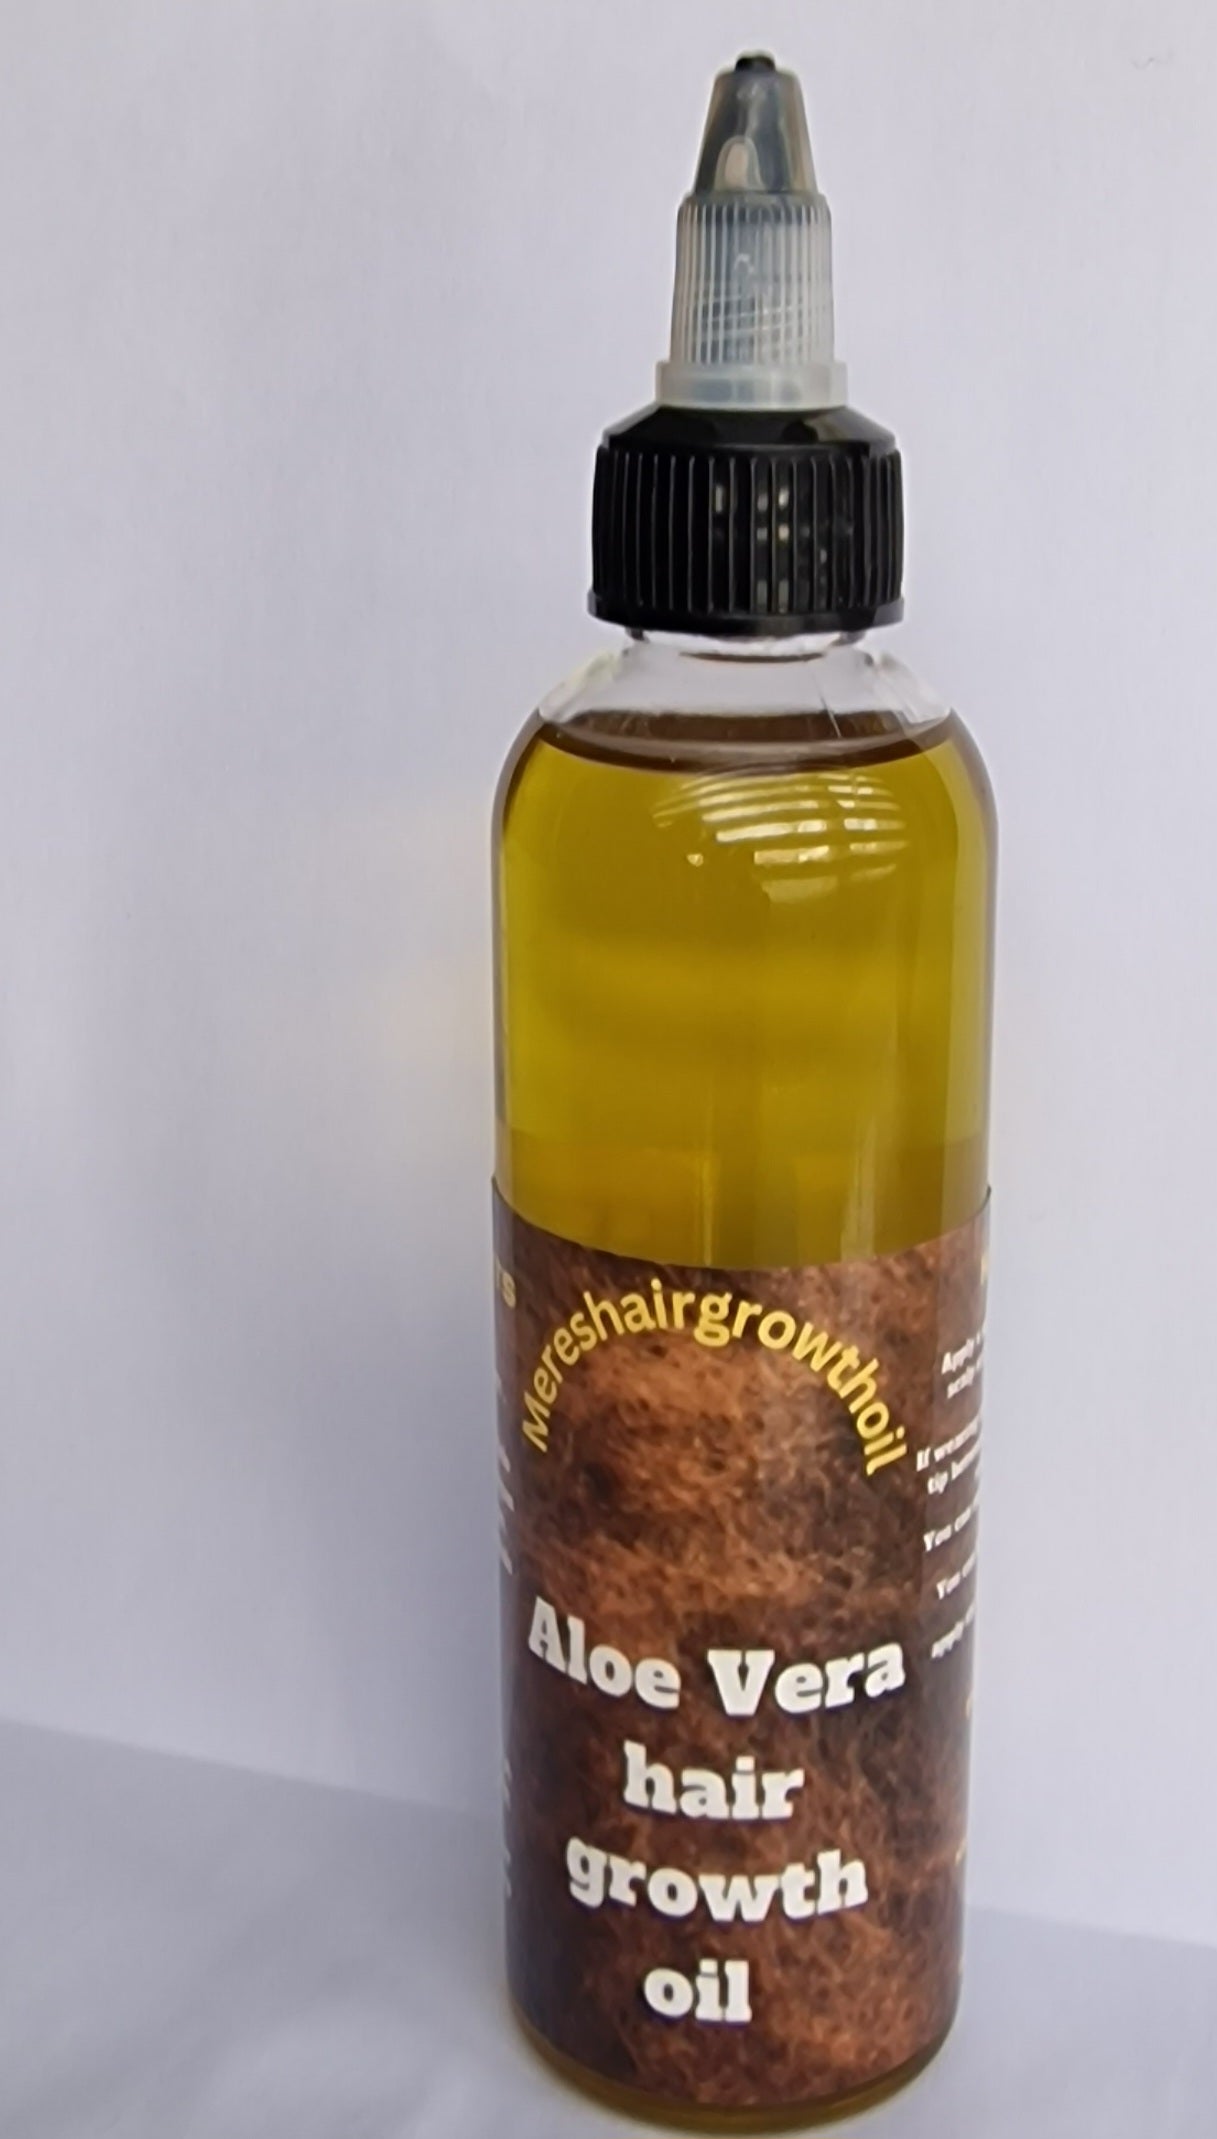 Aloe Vera hair growth oil MERE'S hair growth oil